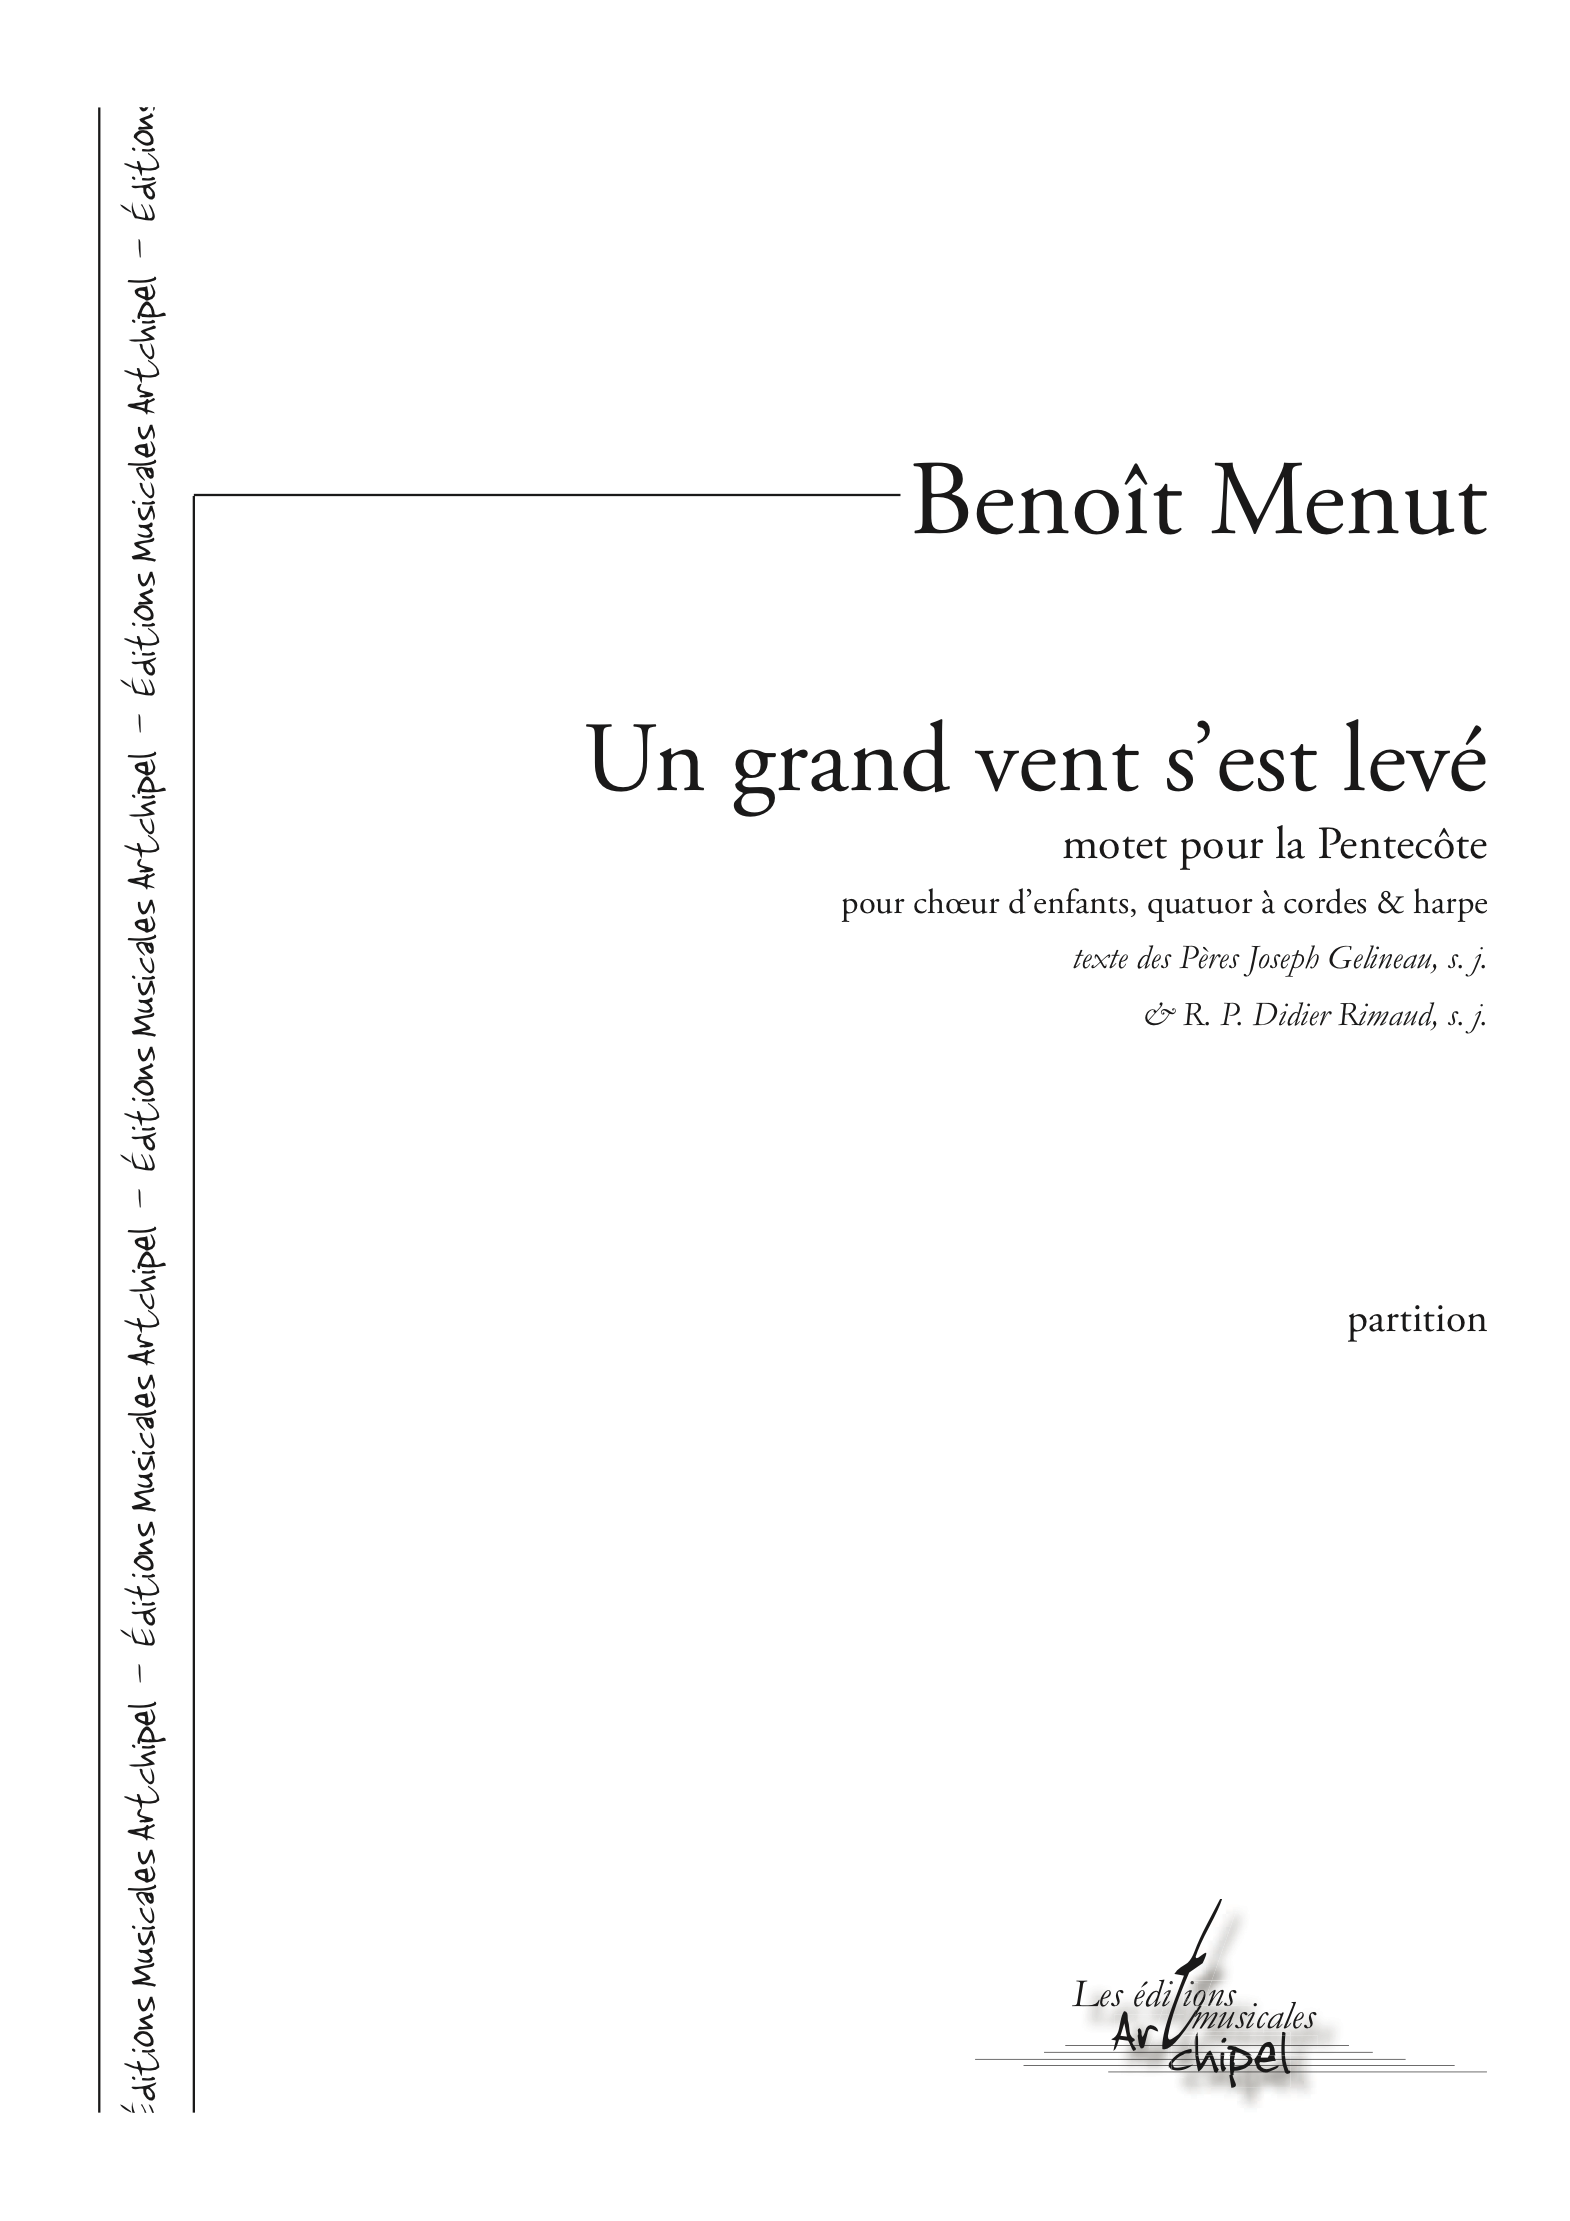 grandVquat version Quatuor a cordes et Harpe MENUT Benoit A4 z